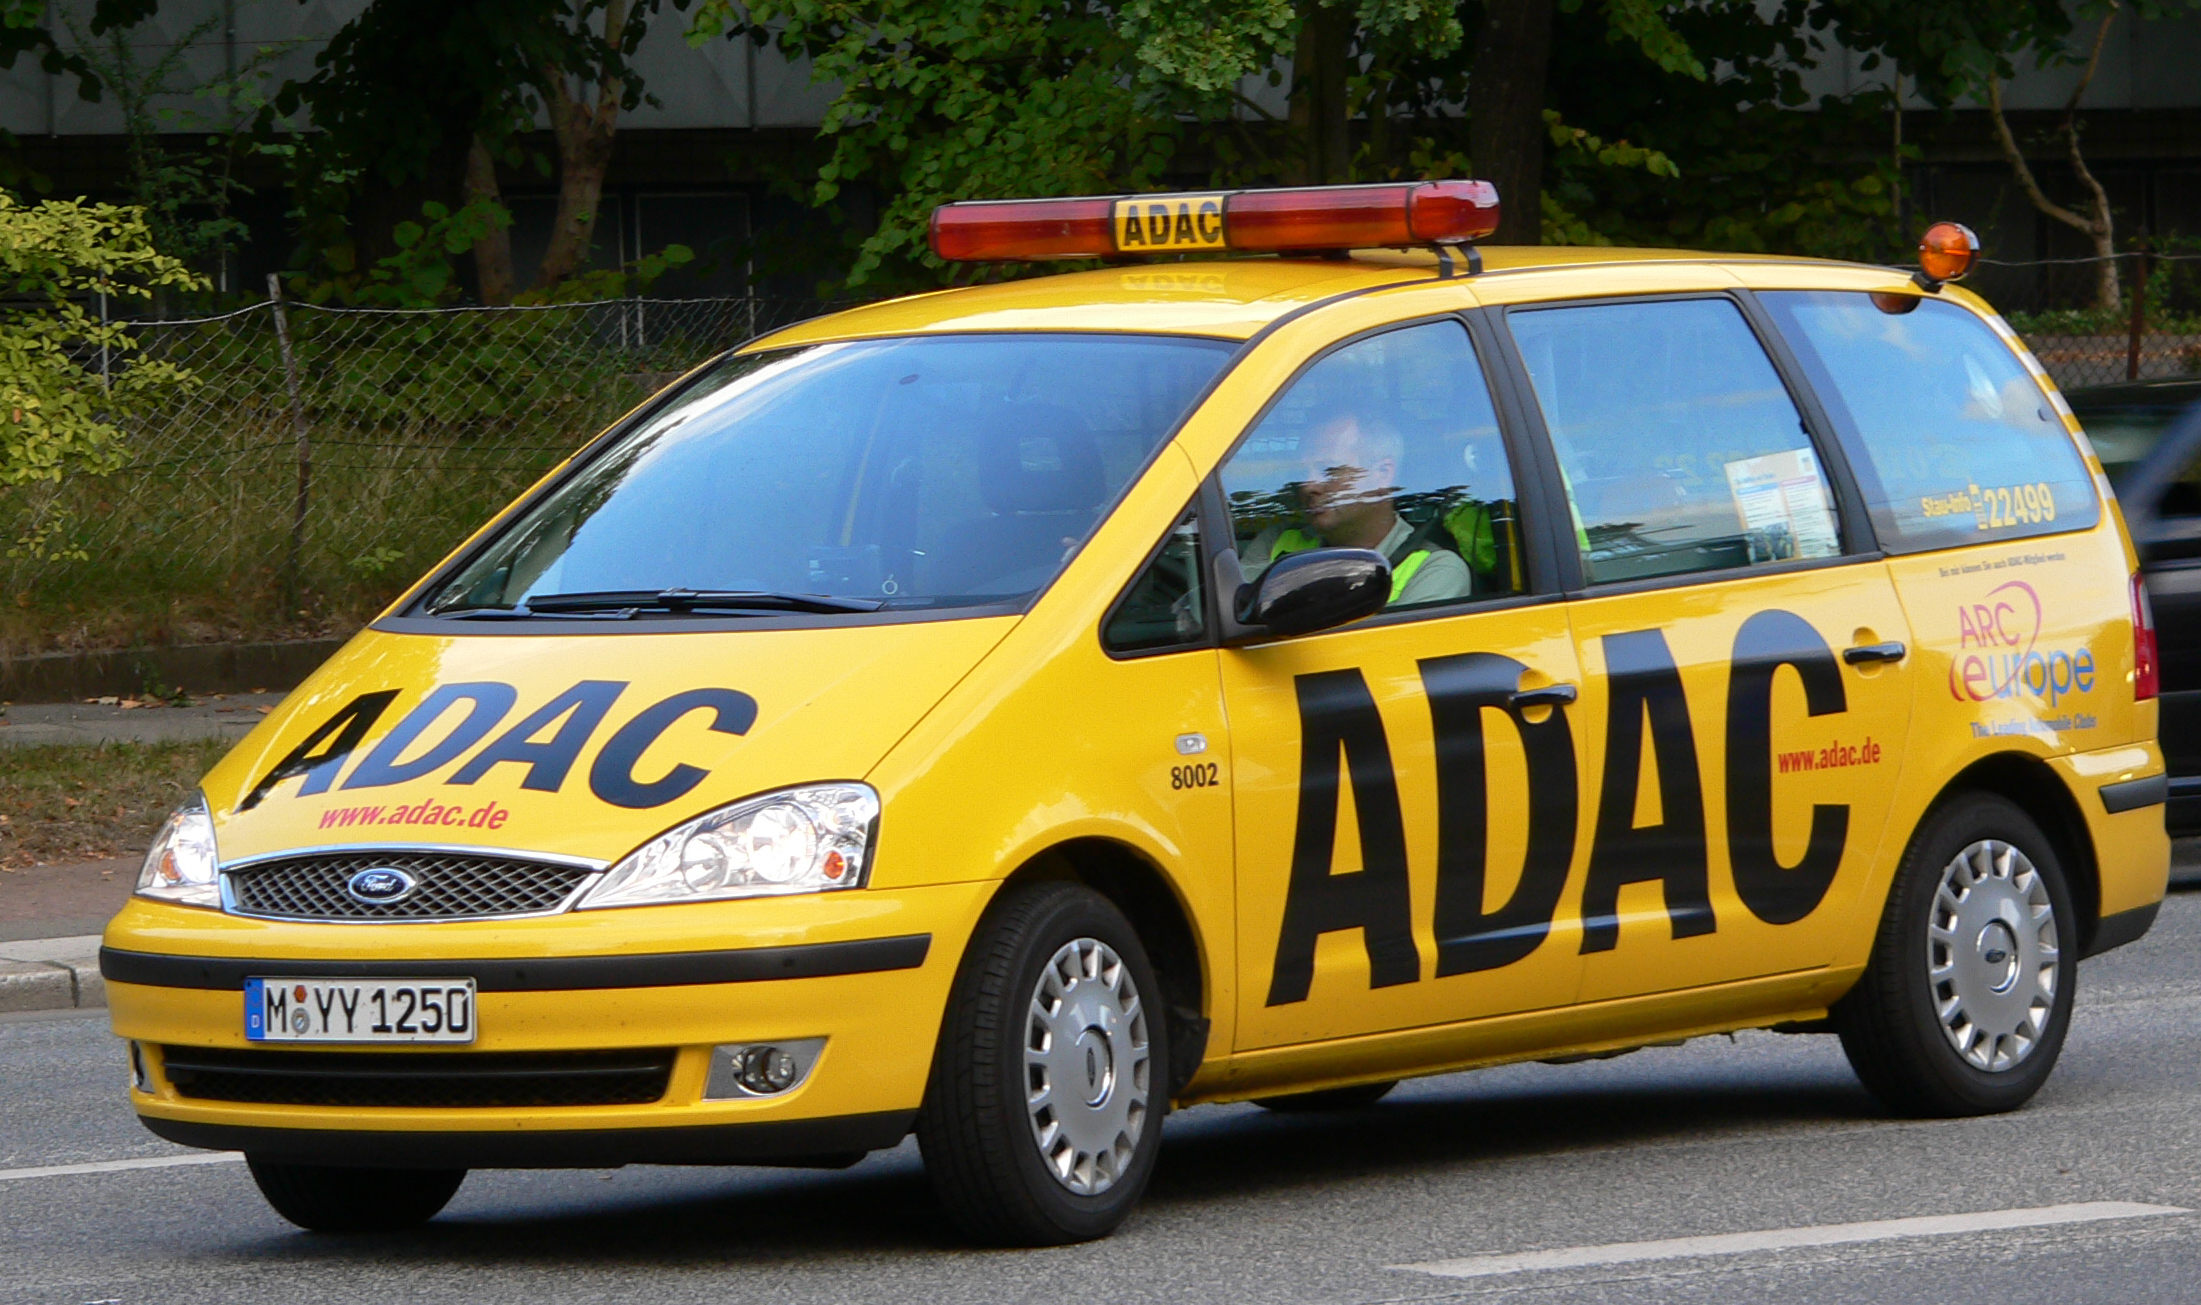 File:ADAC Auto.jpg